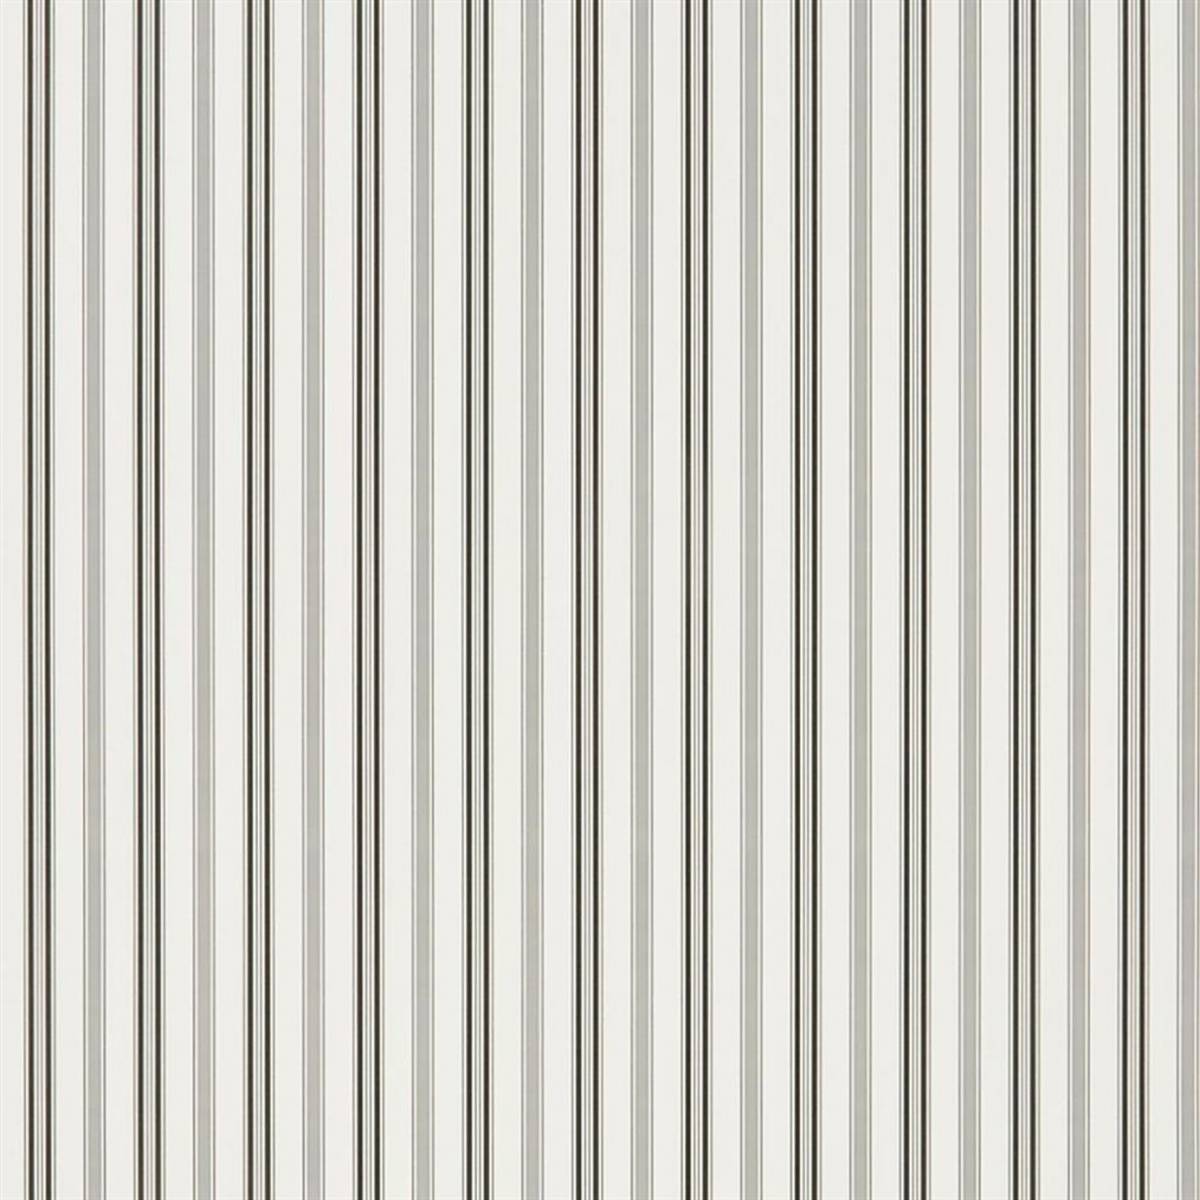 Basil Stripe Wallpaper - Black (PRL709/04) - Ralph Lauren Signature Stripe  Library Wallpapers Collection